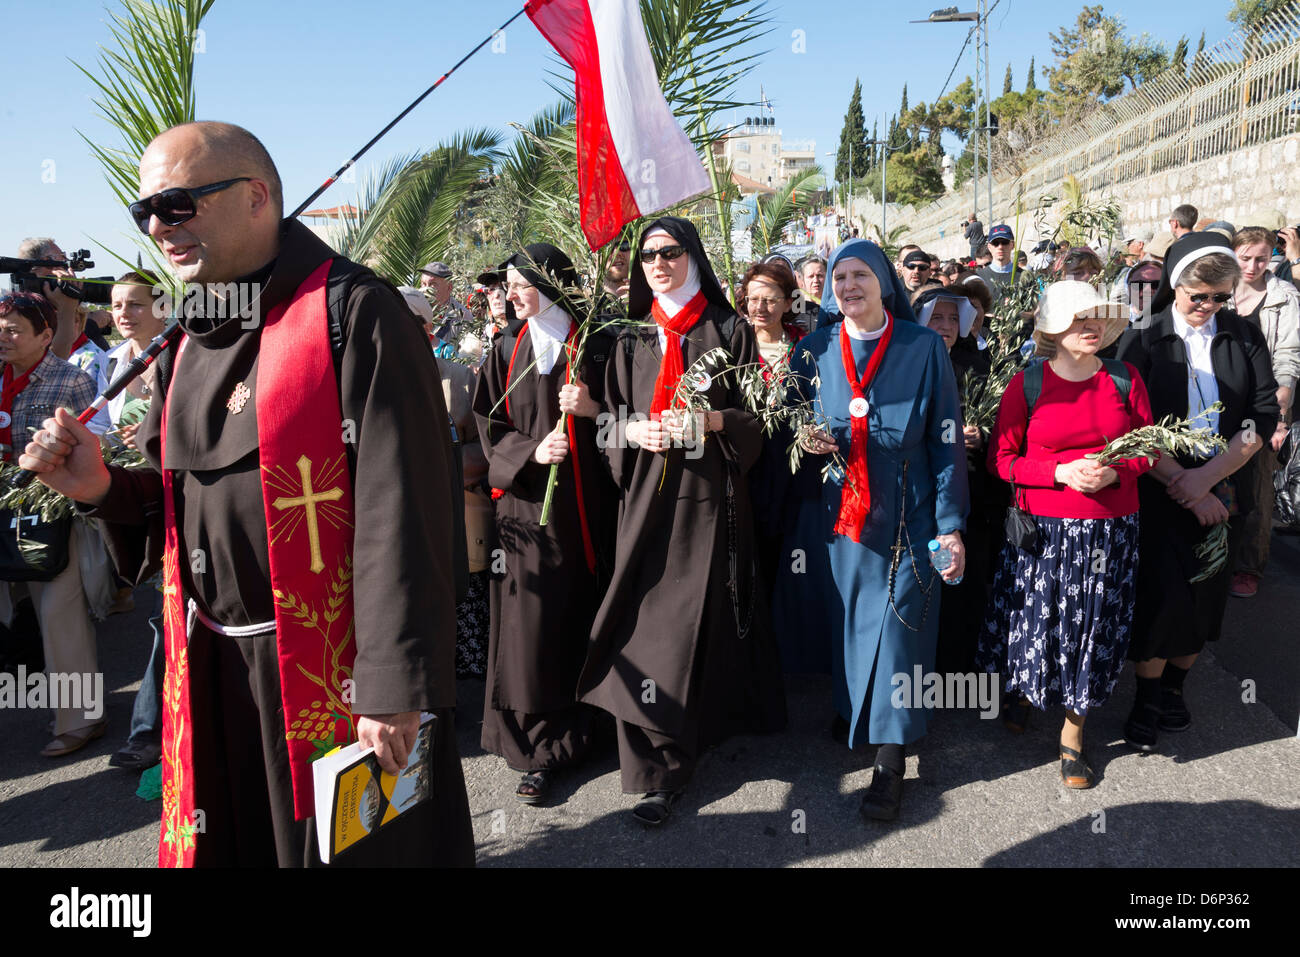 JERUSALEM, ISRAEL - March 24: Catholic Palm Sunday procession from Mount of Olives on March 24, 2013 in Jerusalem, Israel. Stock Photo